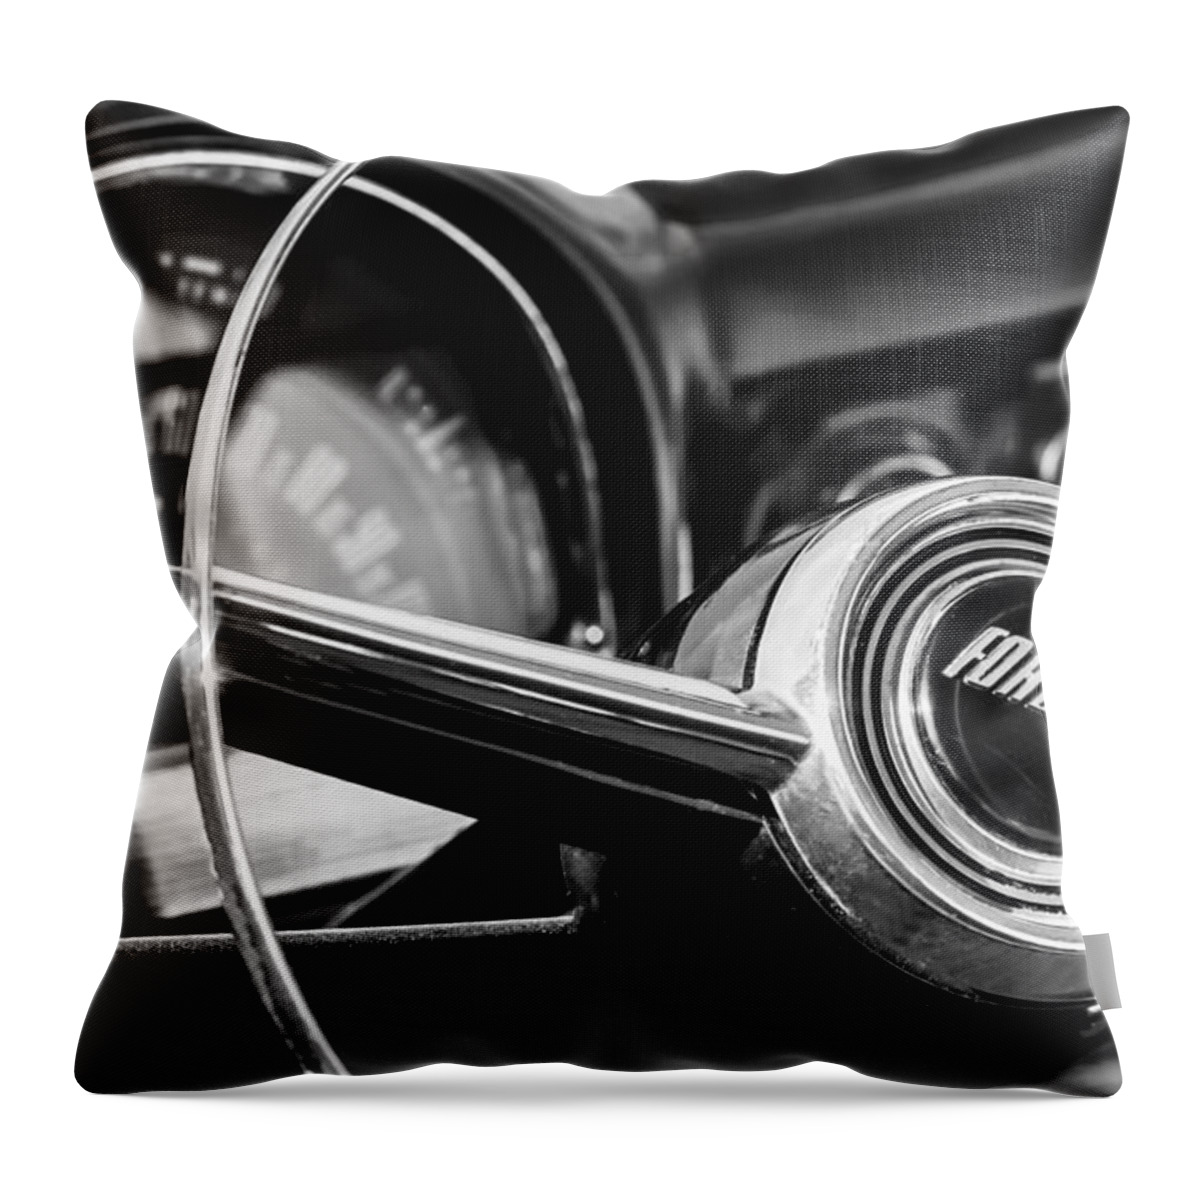 1952 Ford Wagon Steering Wheel Emblem Throw Pillow featuring the photograph 1952 Ford Wagon Steering Wheel Emblem -0187bw by Jill Reger